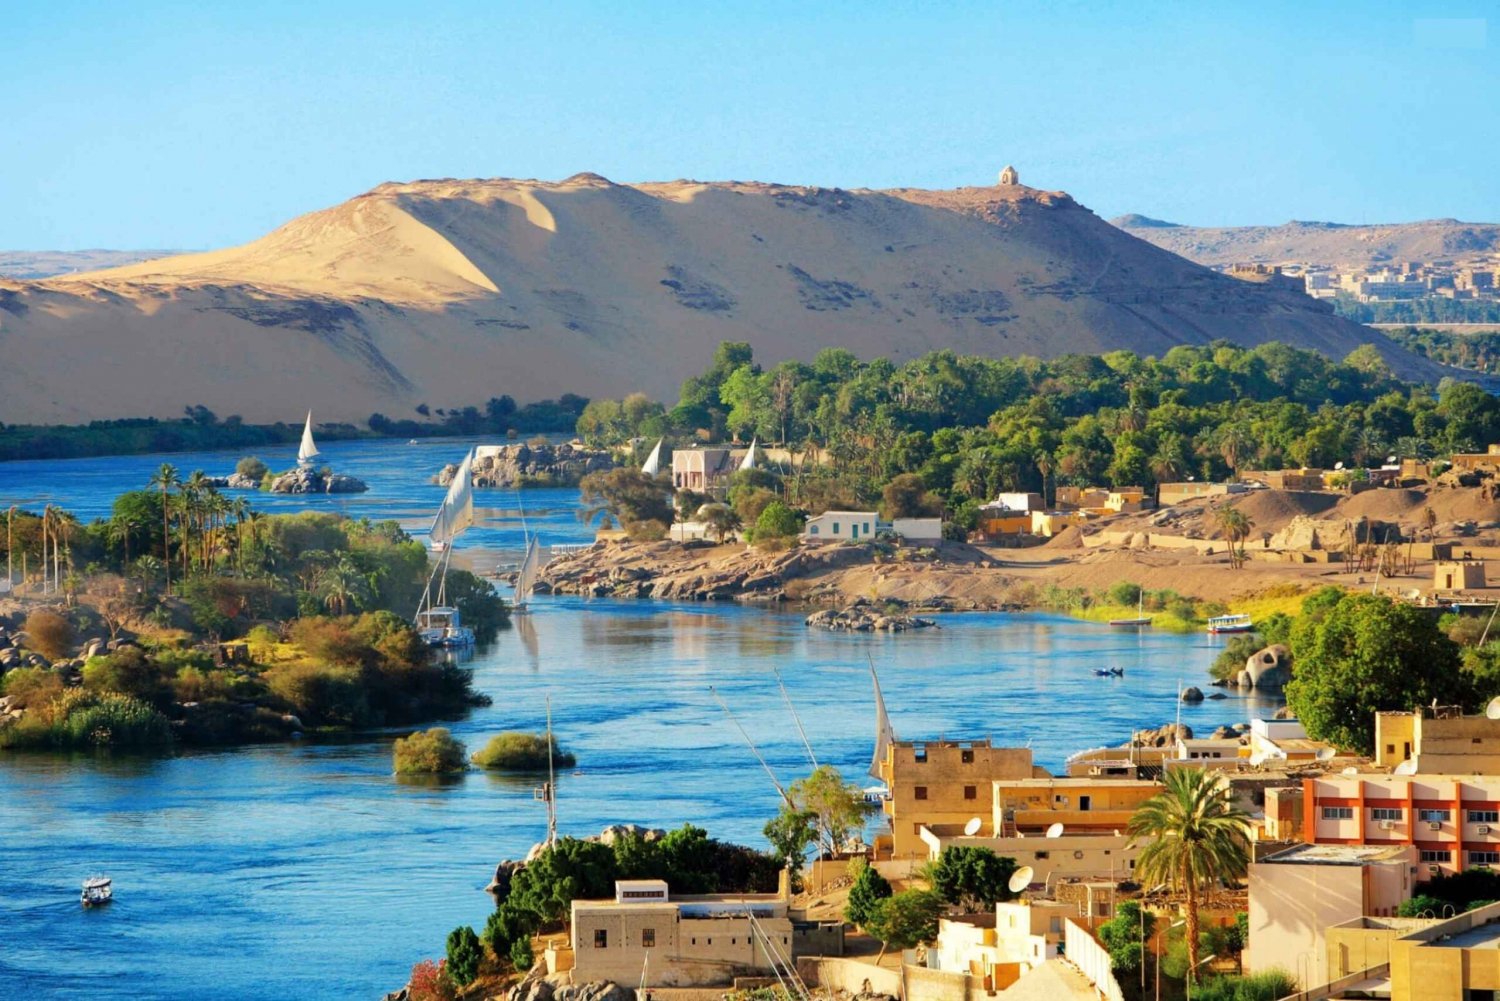 Cairo & Nile: 7 Days Hotel & Cruise by Flight